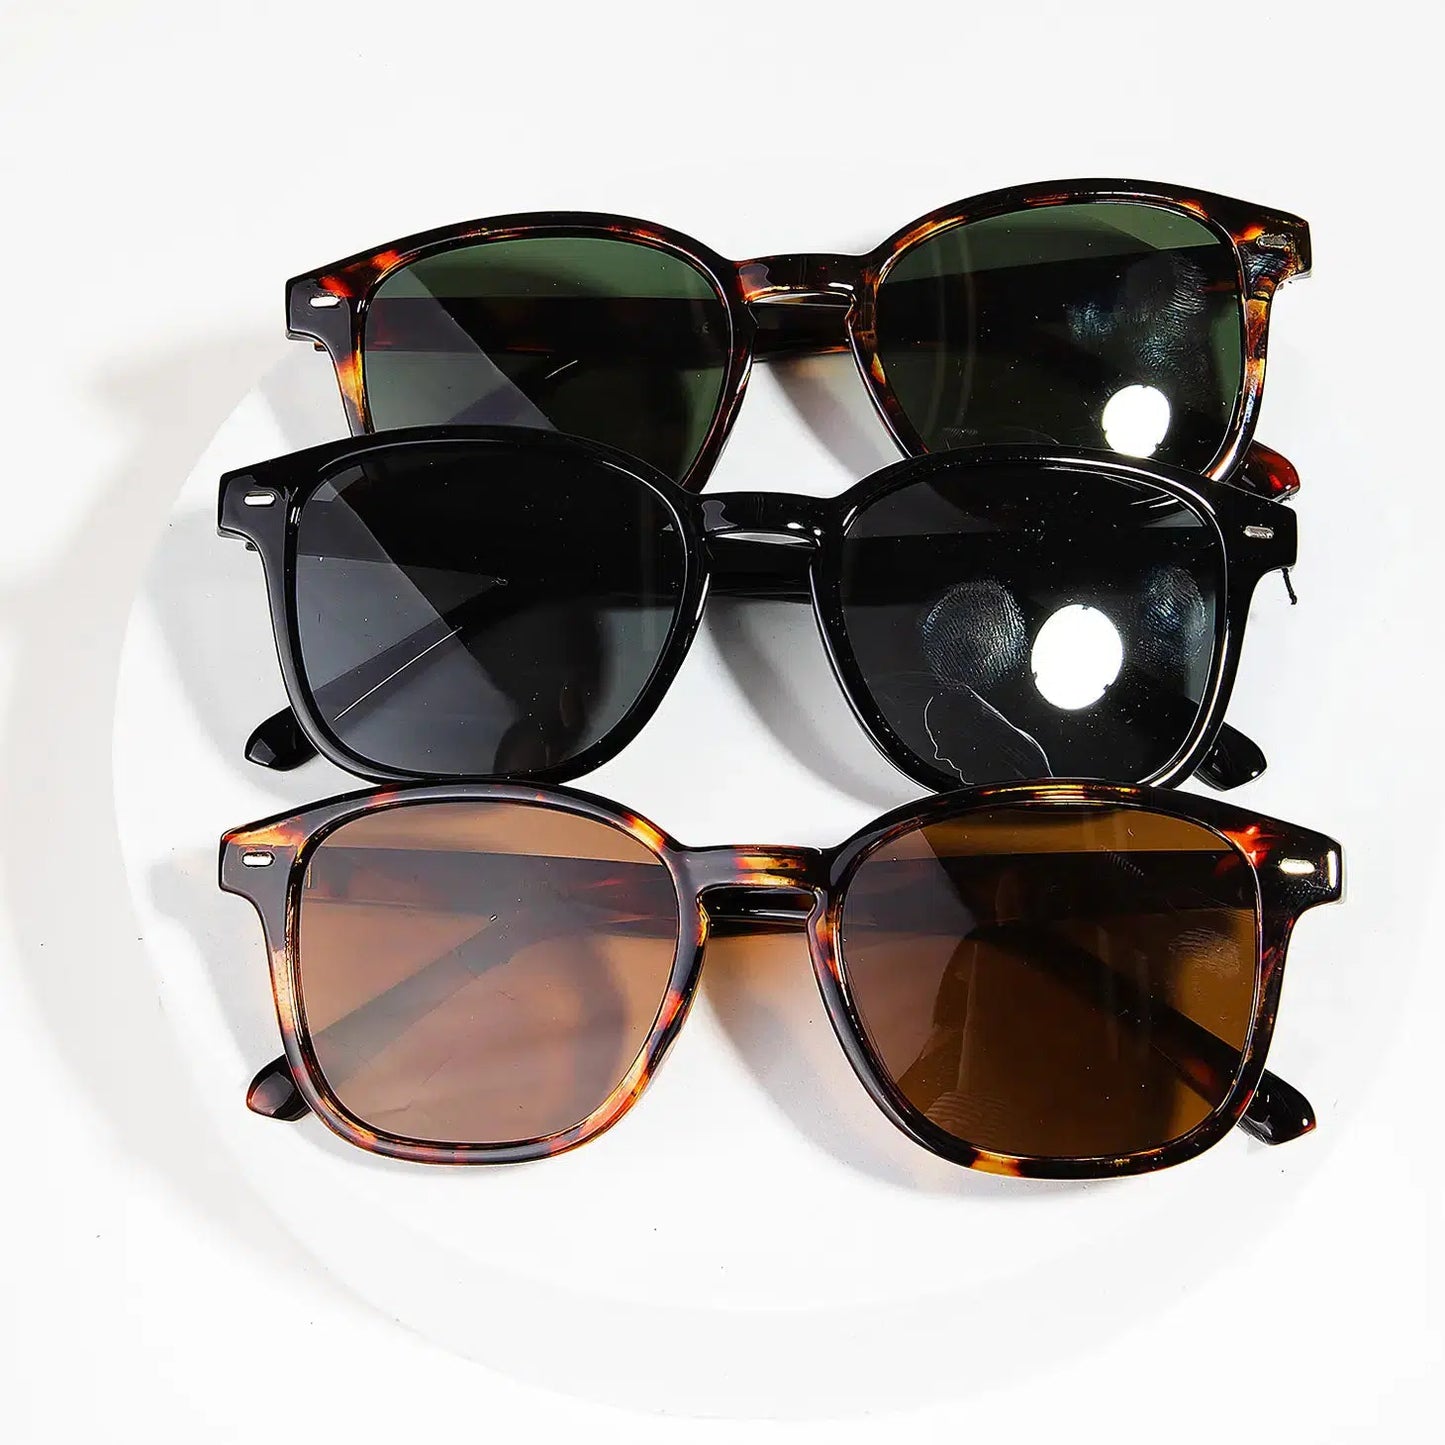 Wayferer Sunglasses